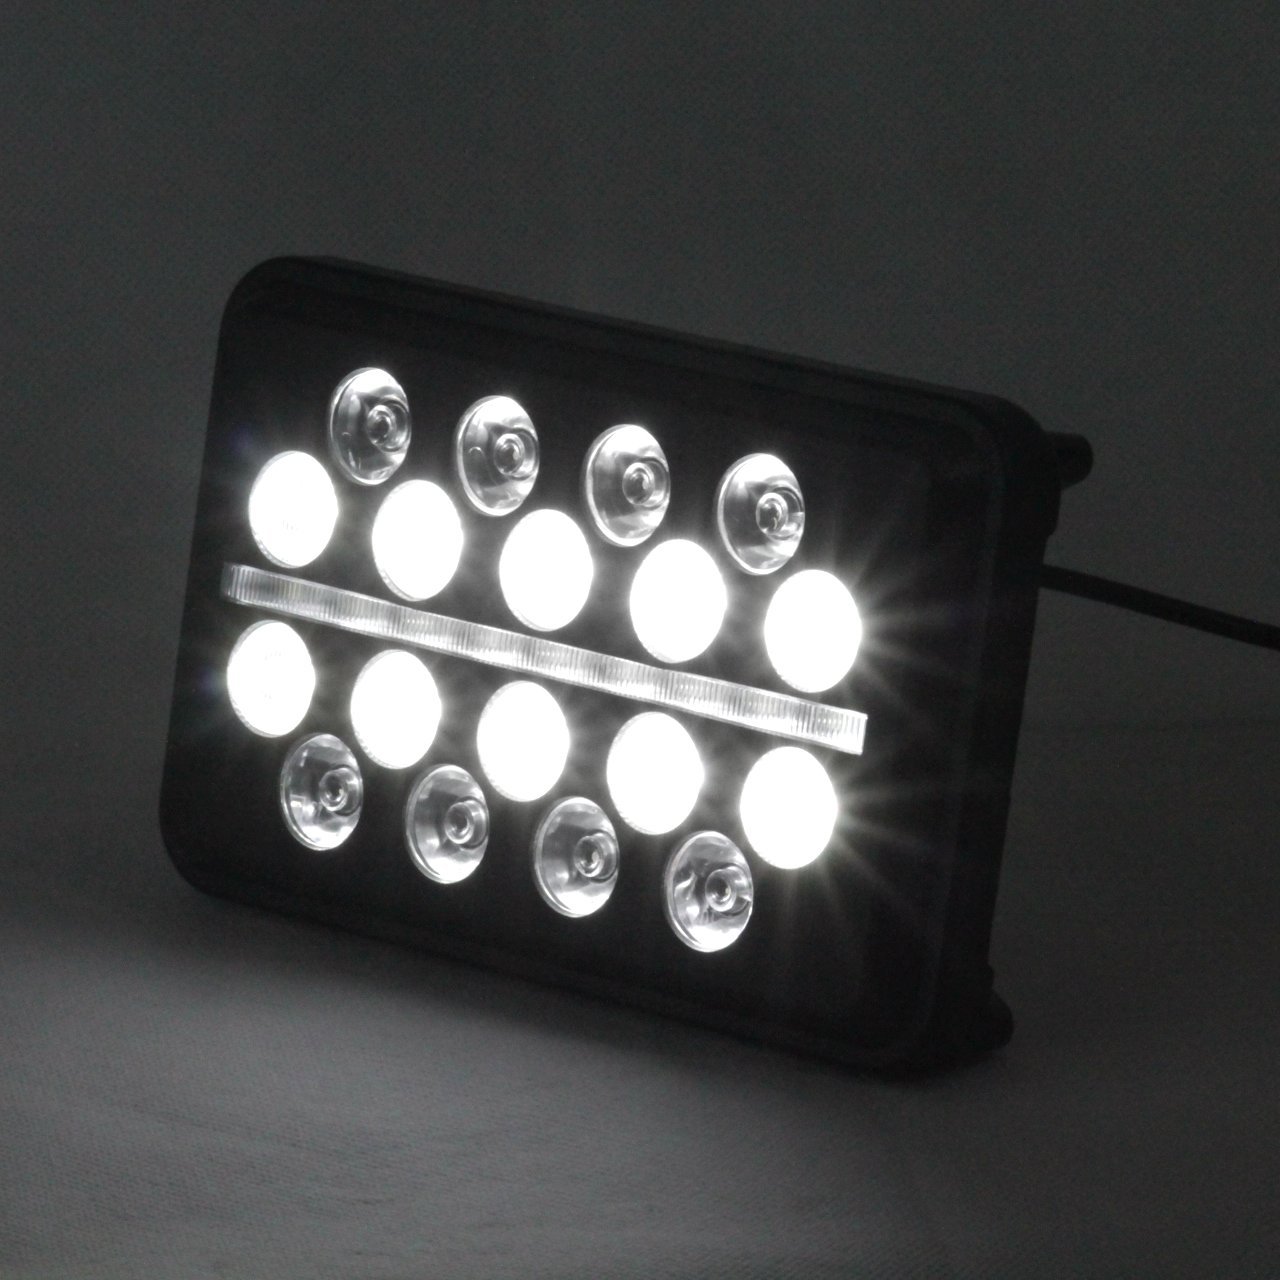 4 X 6 LED Headlights - 2A1 LED headlights